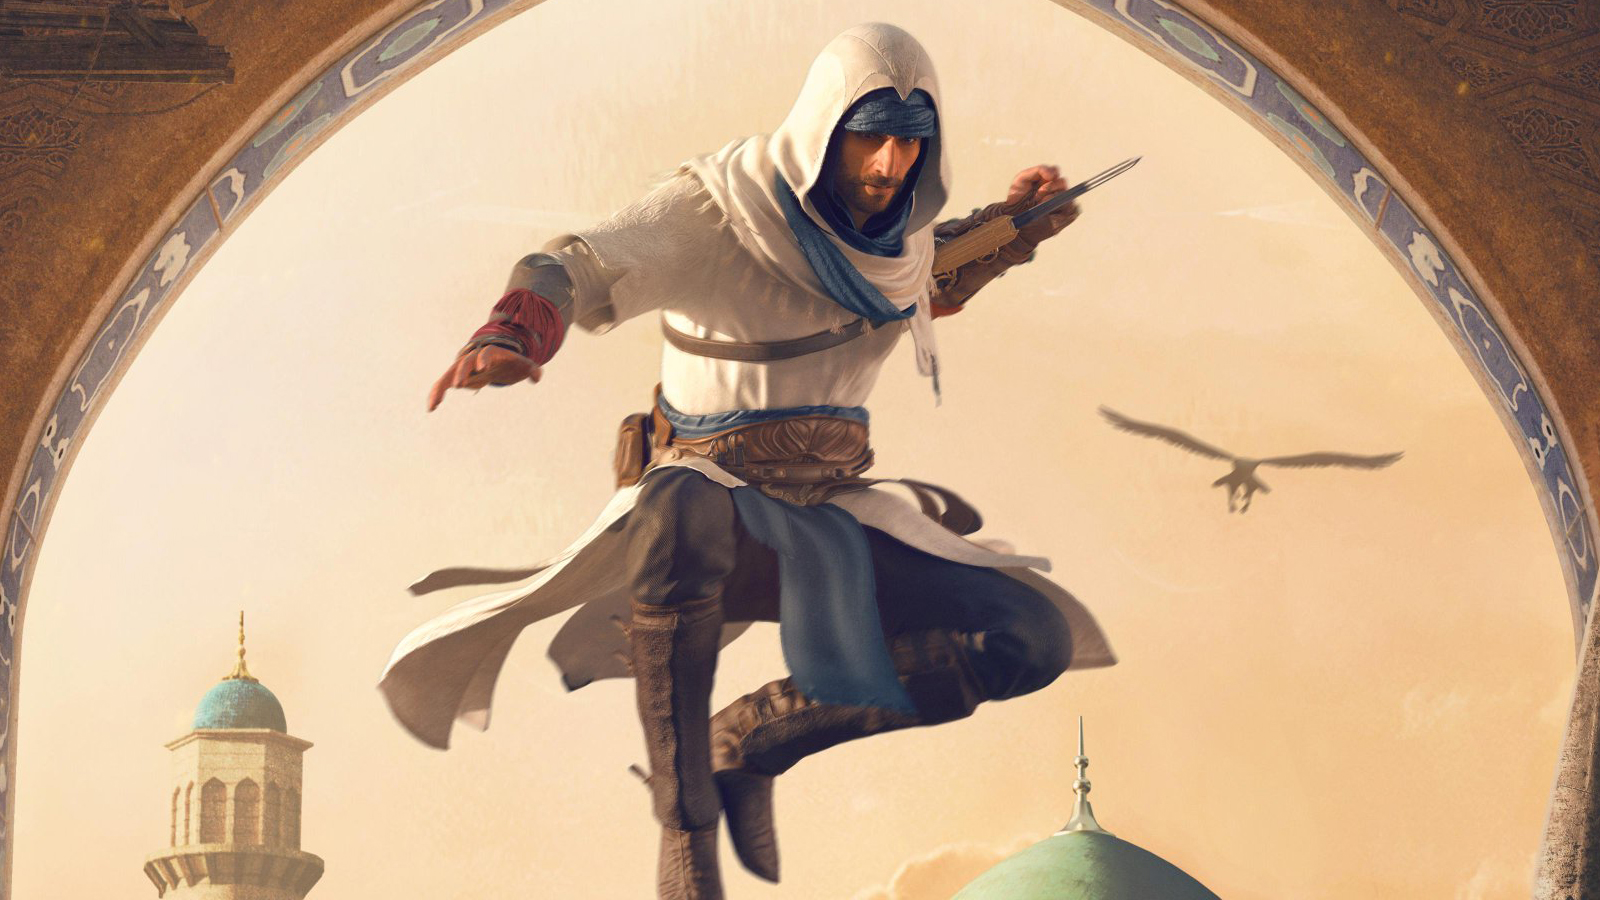 Ubisoft responds to Assassin's Creed backlash over pop-up adverts